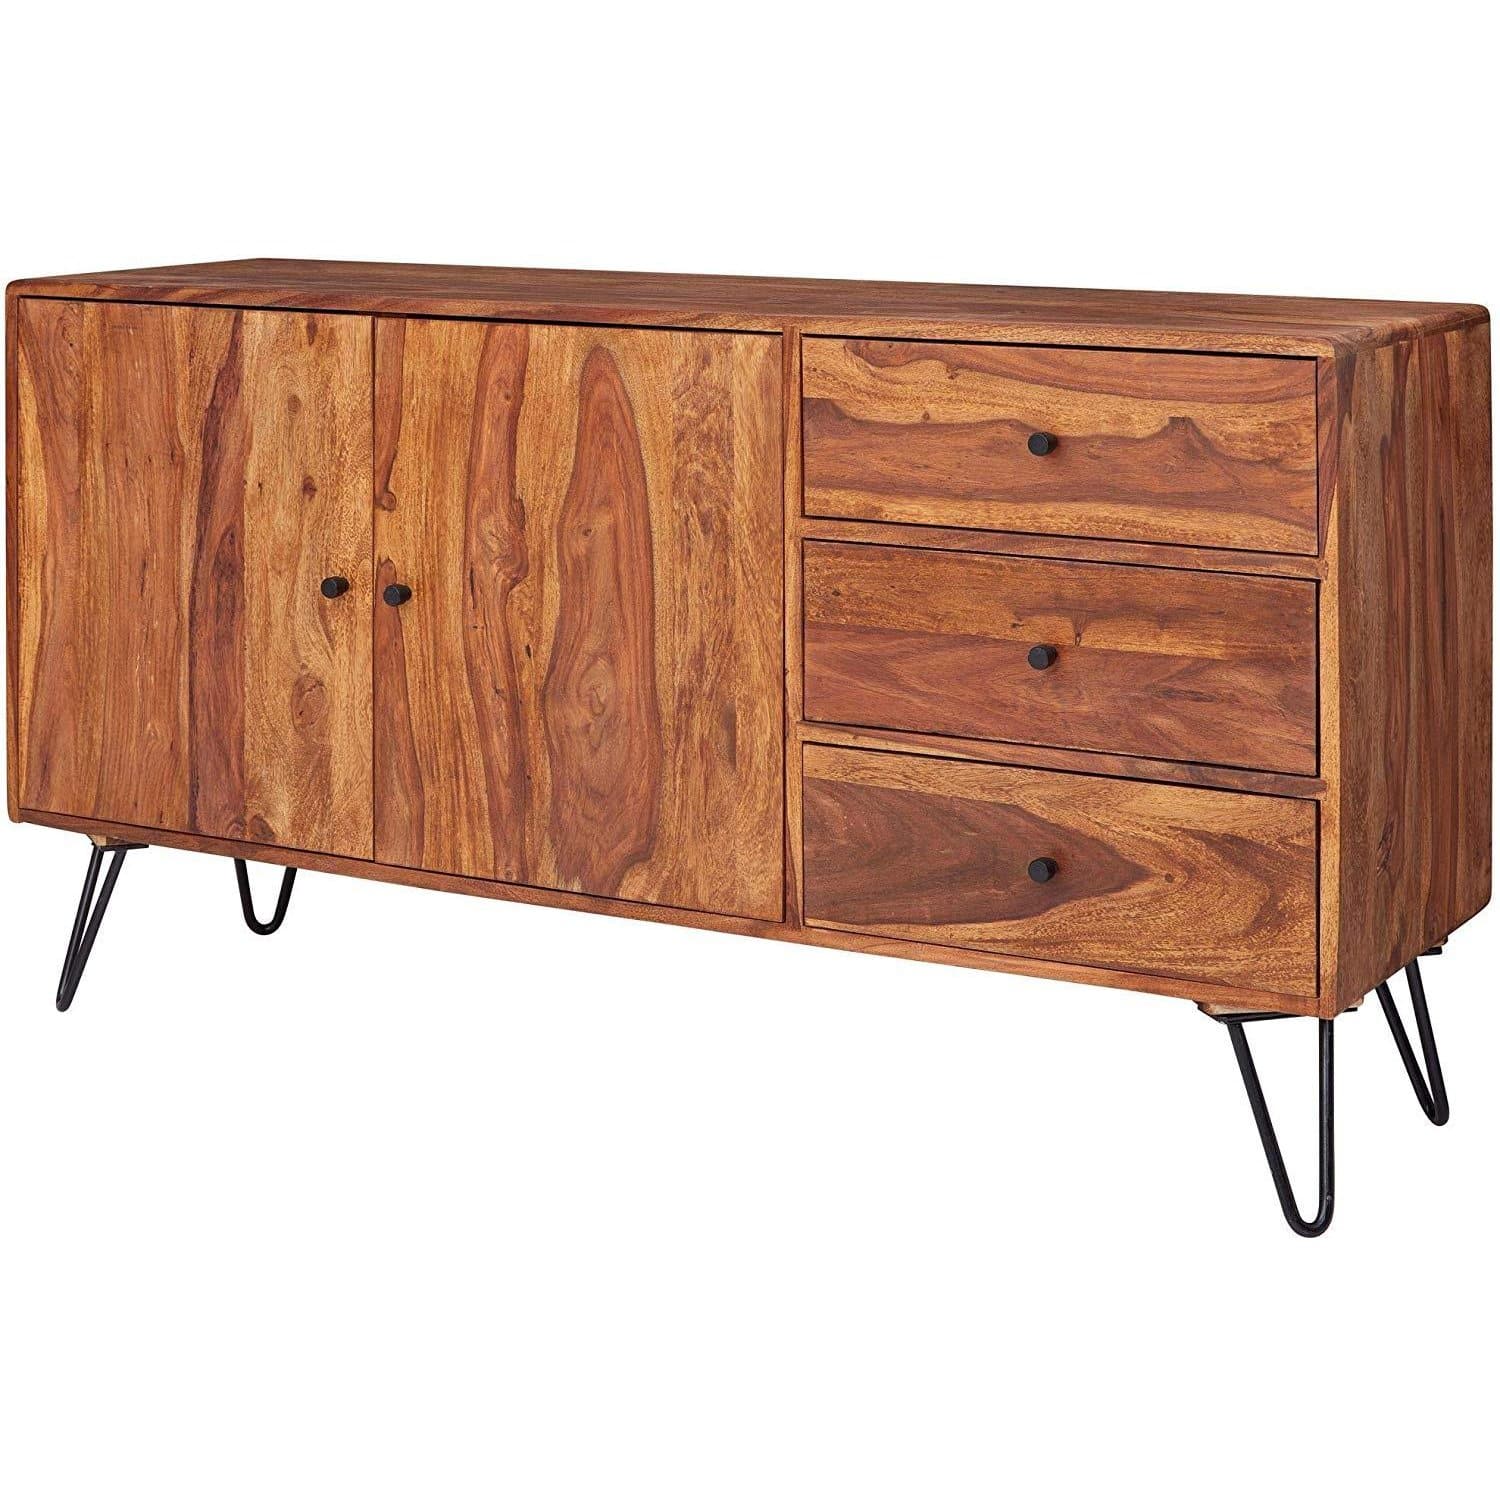 Nancy's Dressers - Solid Wood Cabinet - Dresser Cabinets - Storage Cabinet - 145 x 75 x 40 cm